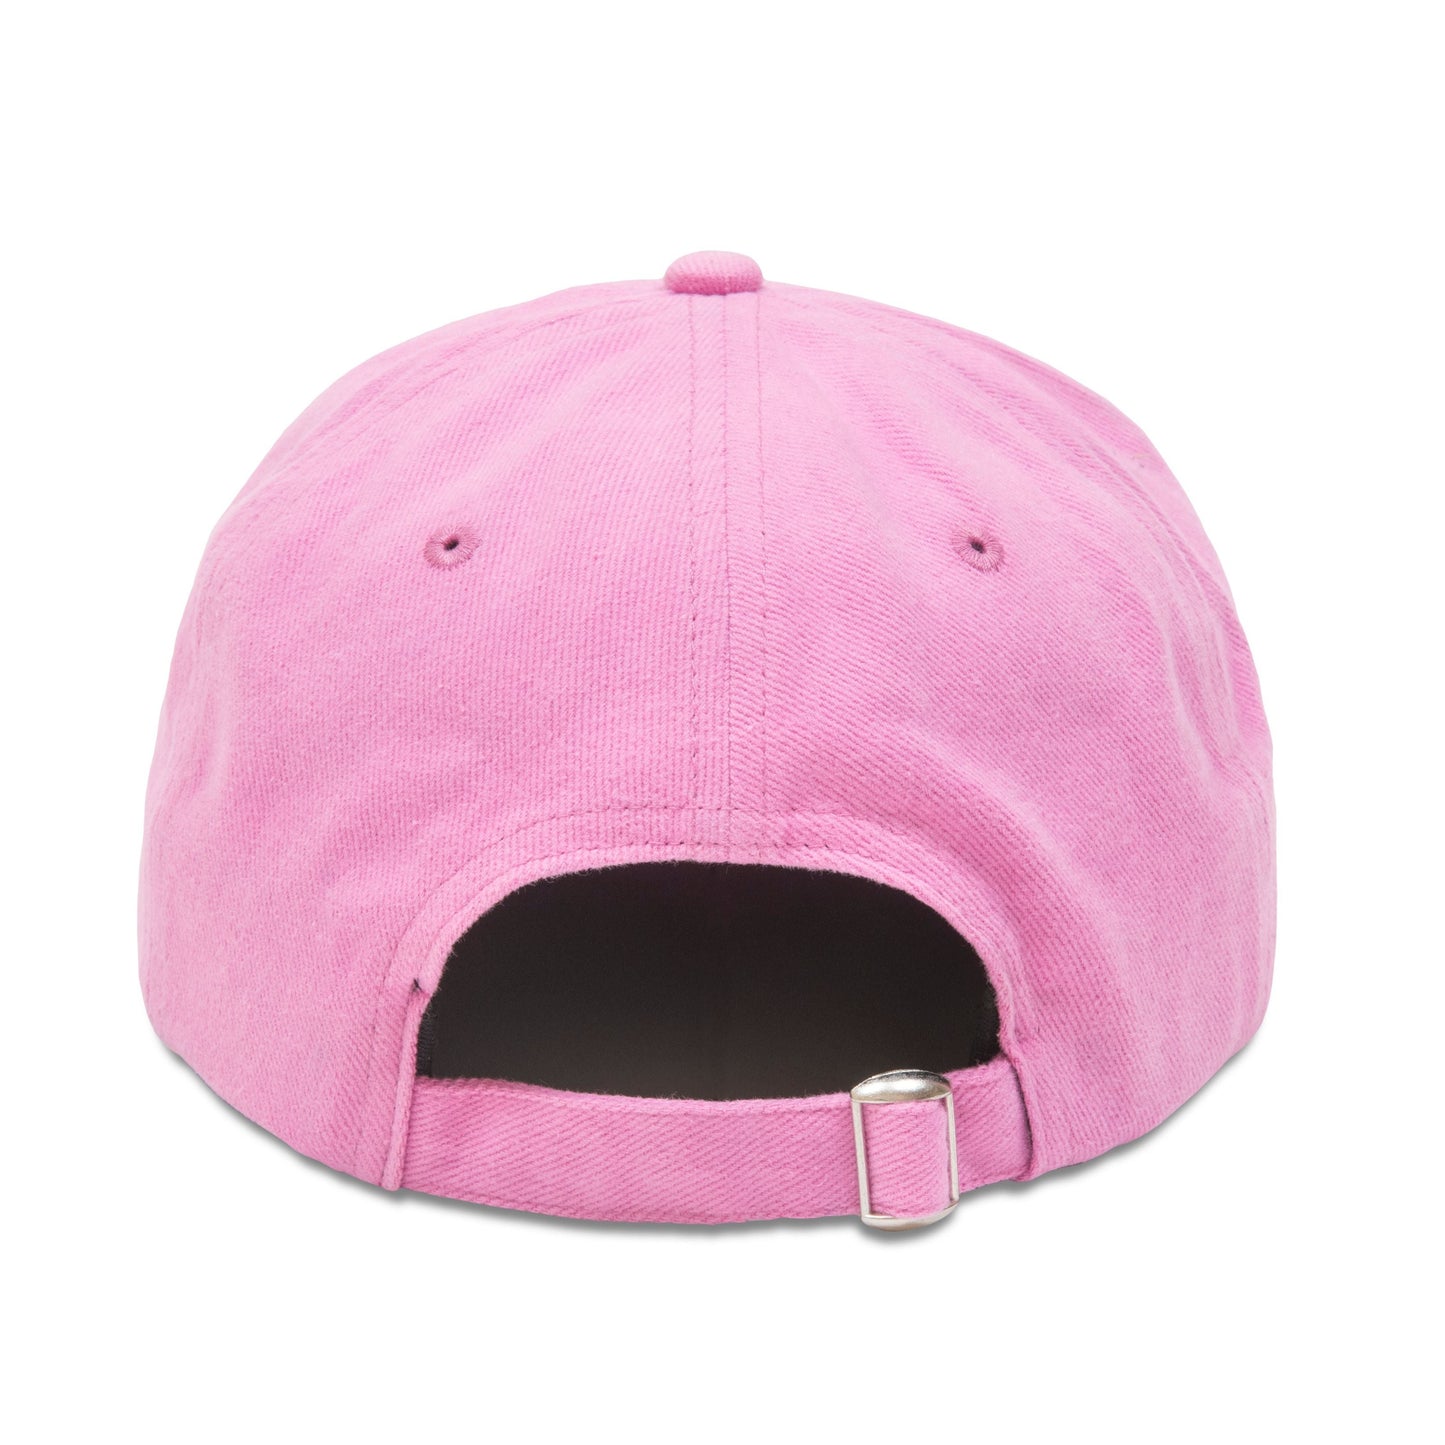 Quartersnacks Pop Art Cap Pink Denim